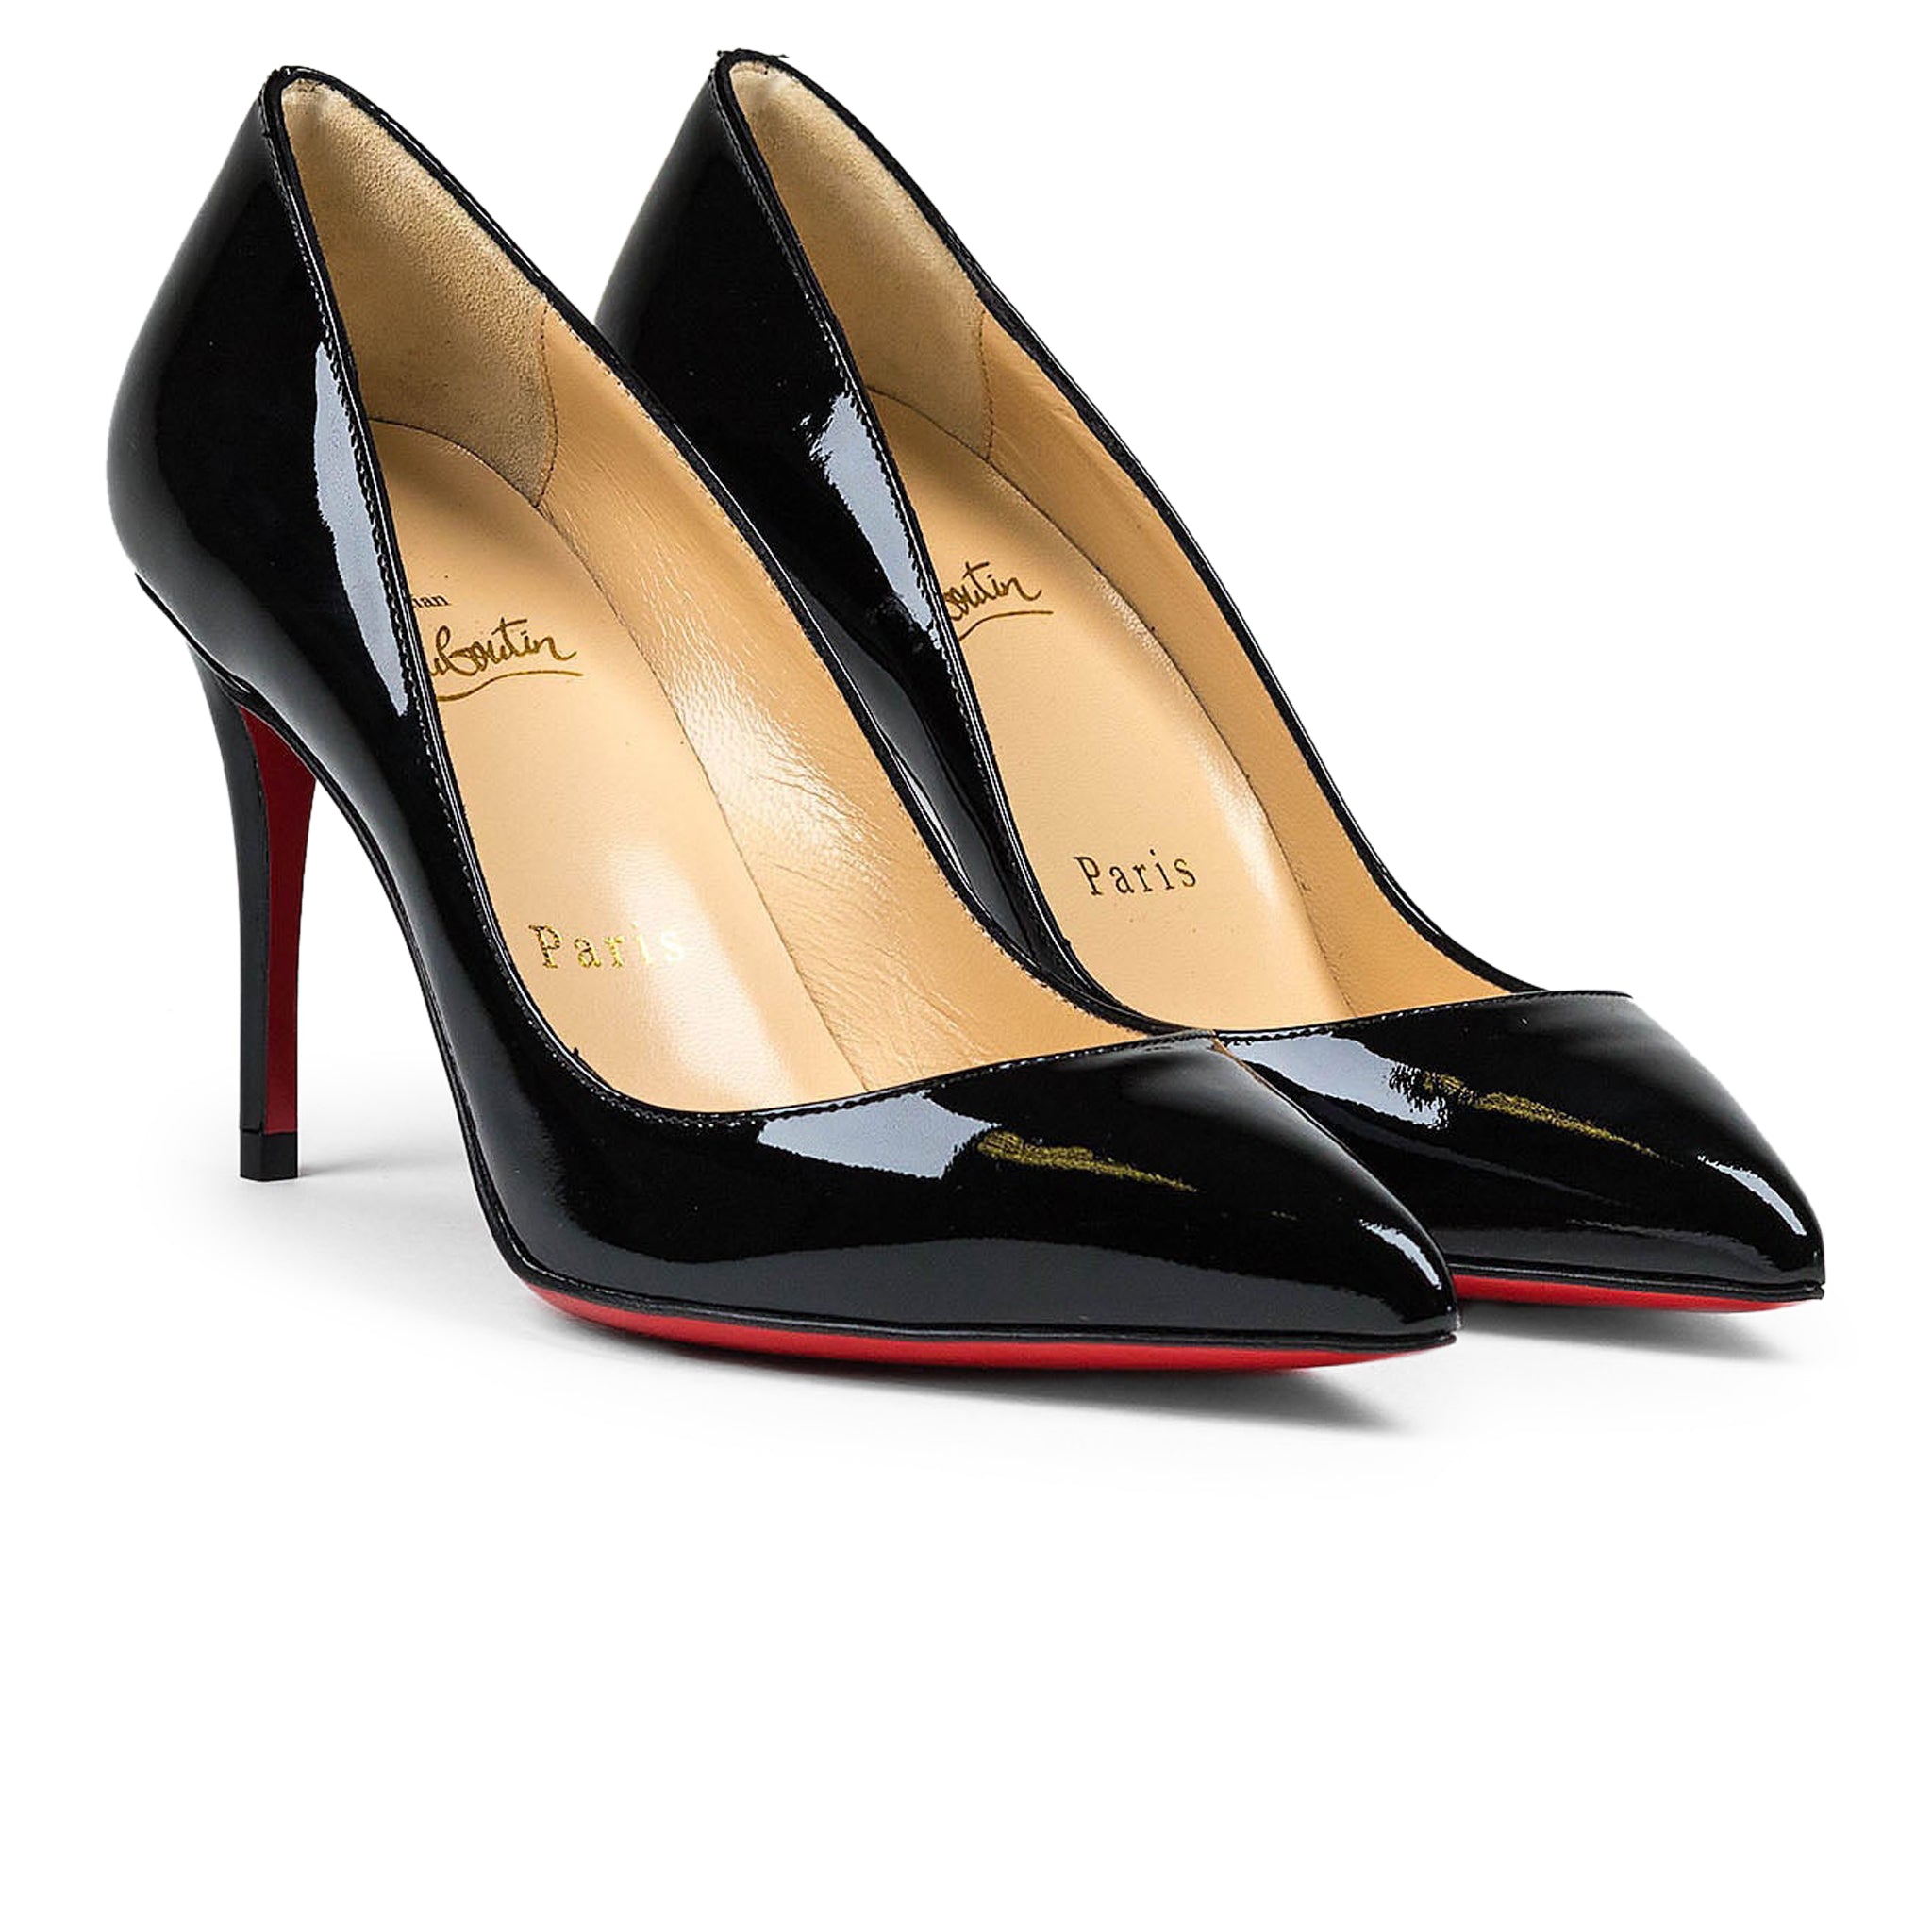 Image of Christian Louboutin Pigalle Follies Patent Black 85 Heel